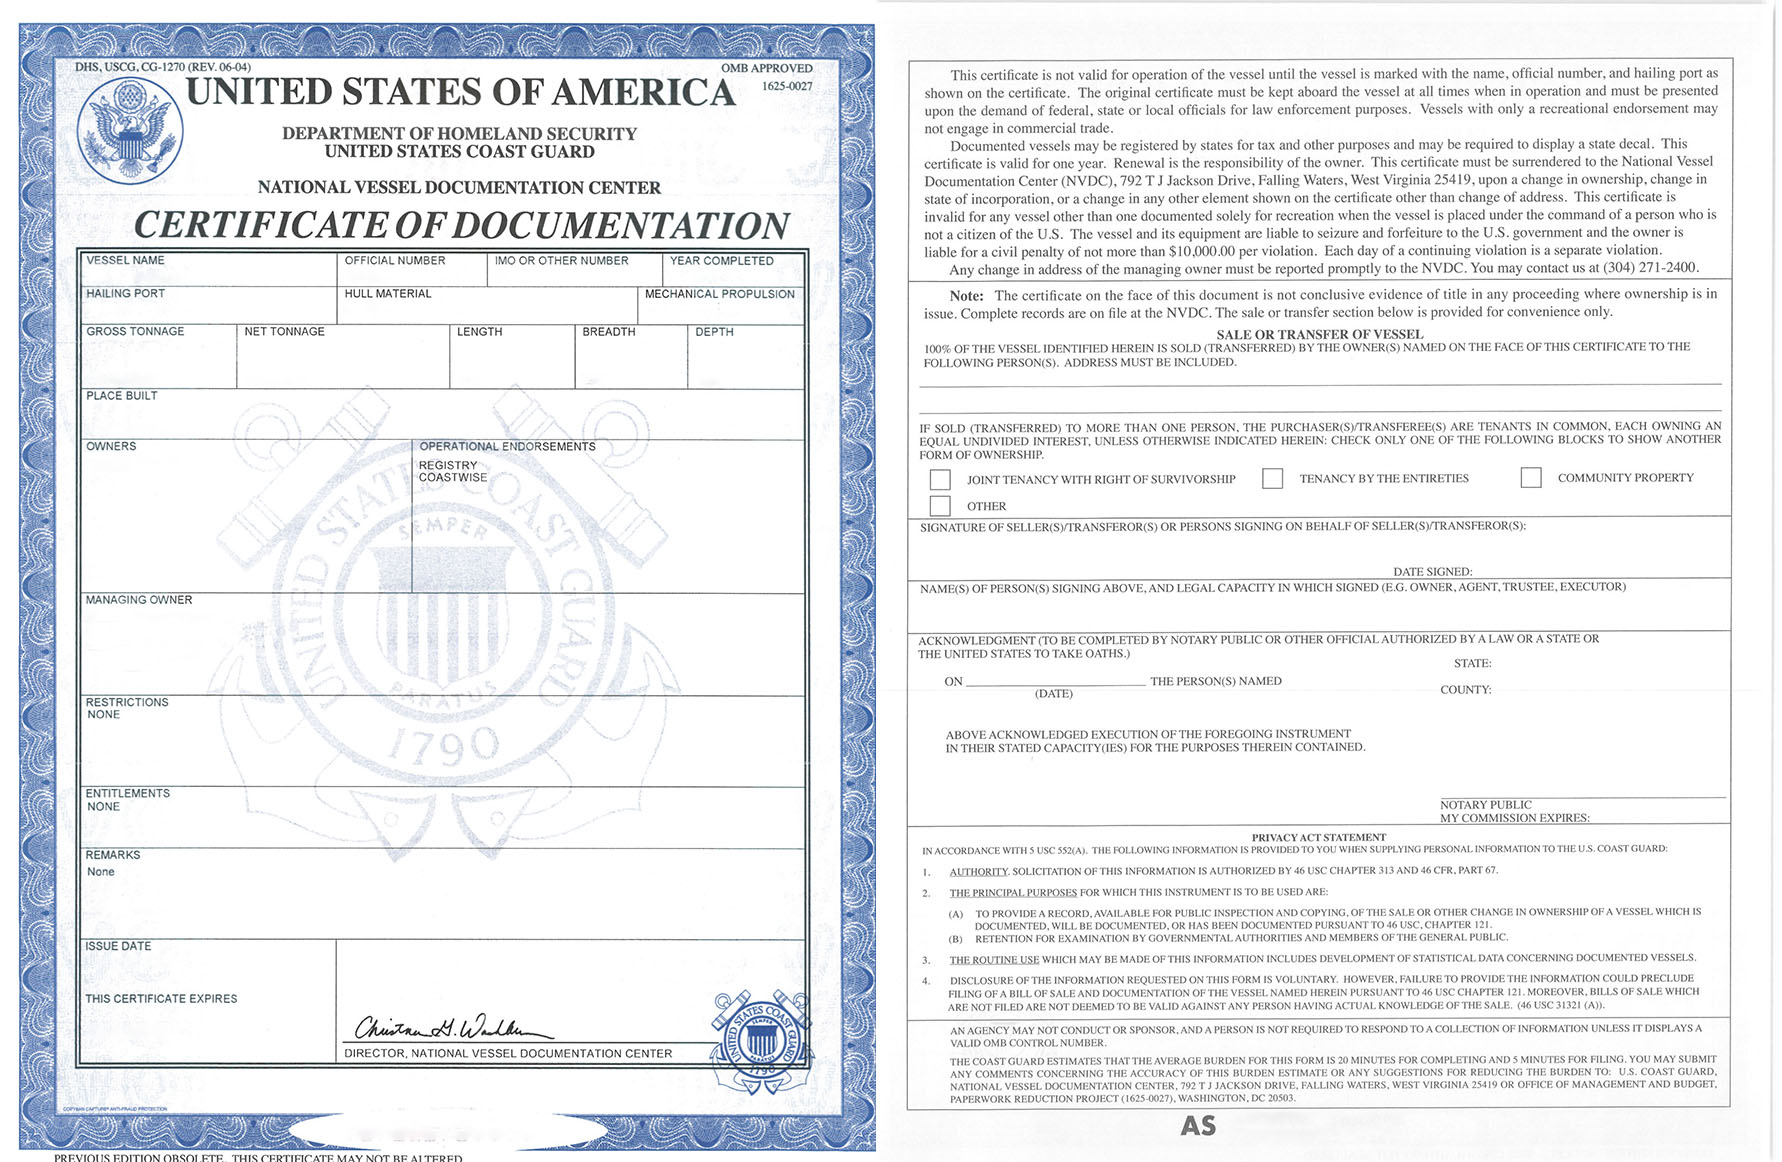 Certificate of Documentation CG-1270